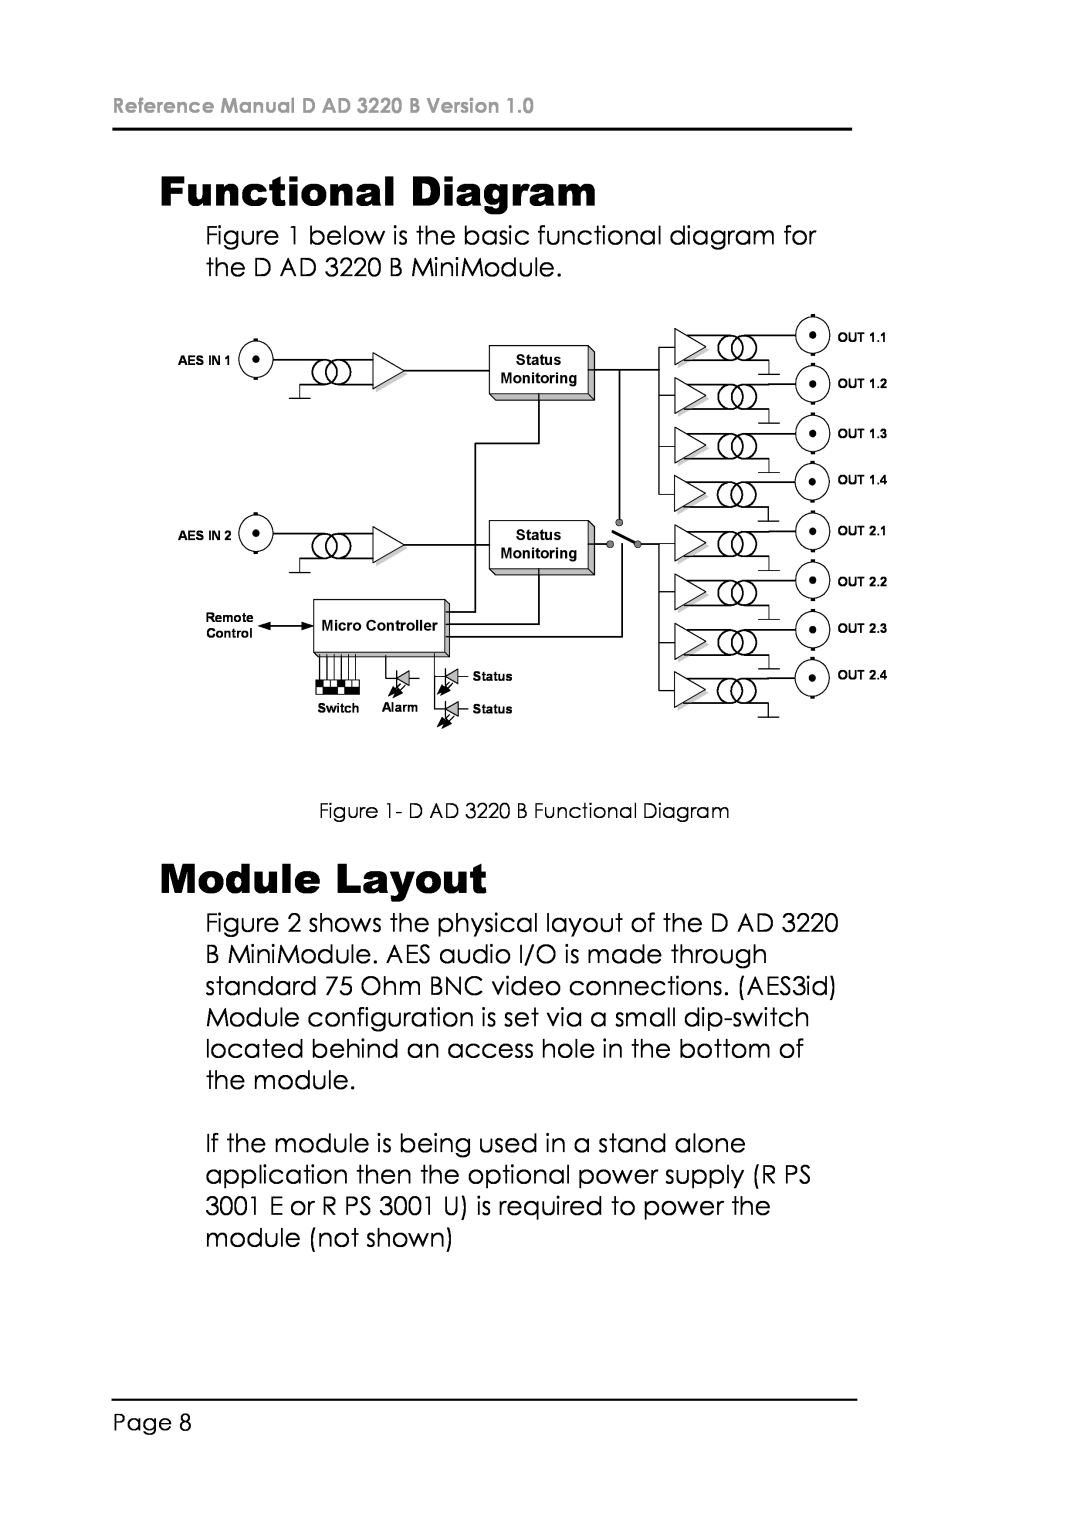 Lynx manual Module Layout, D AD 3220 B Functional Diagram 